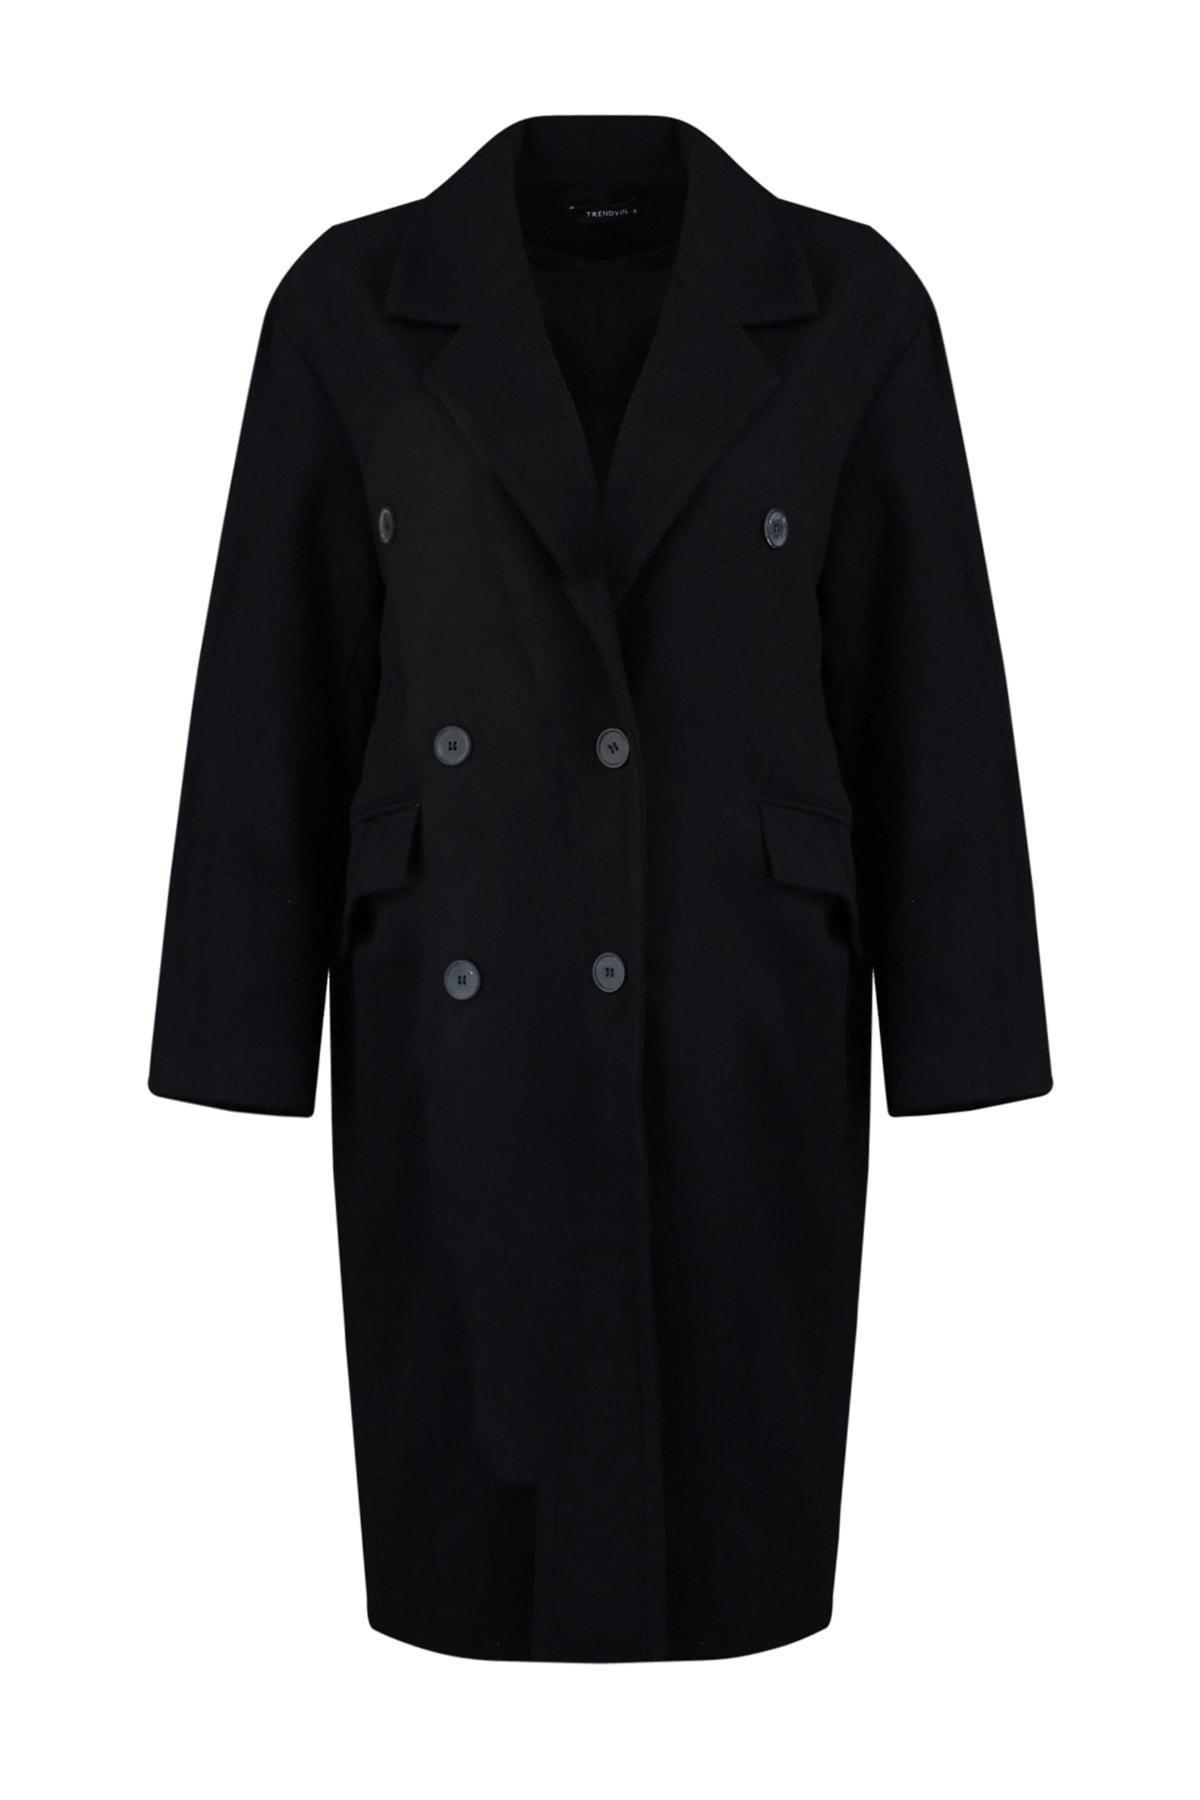 Trendyol - Black Double Breasted Oversize Coat